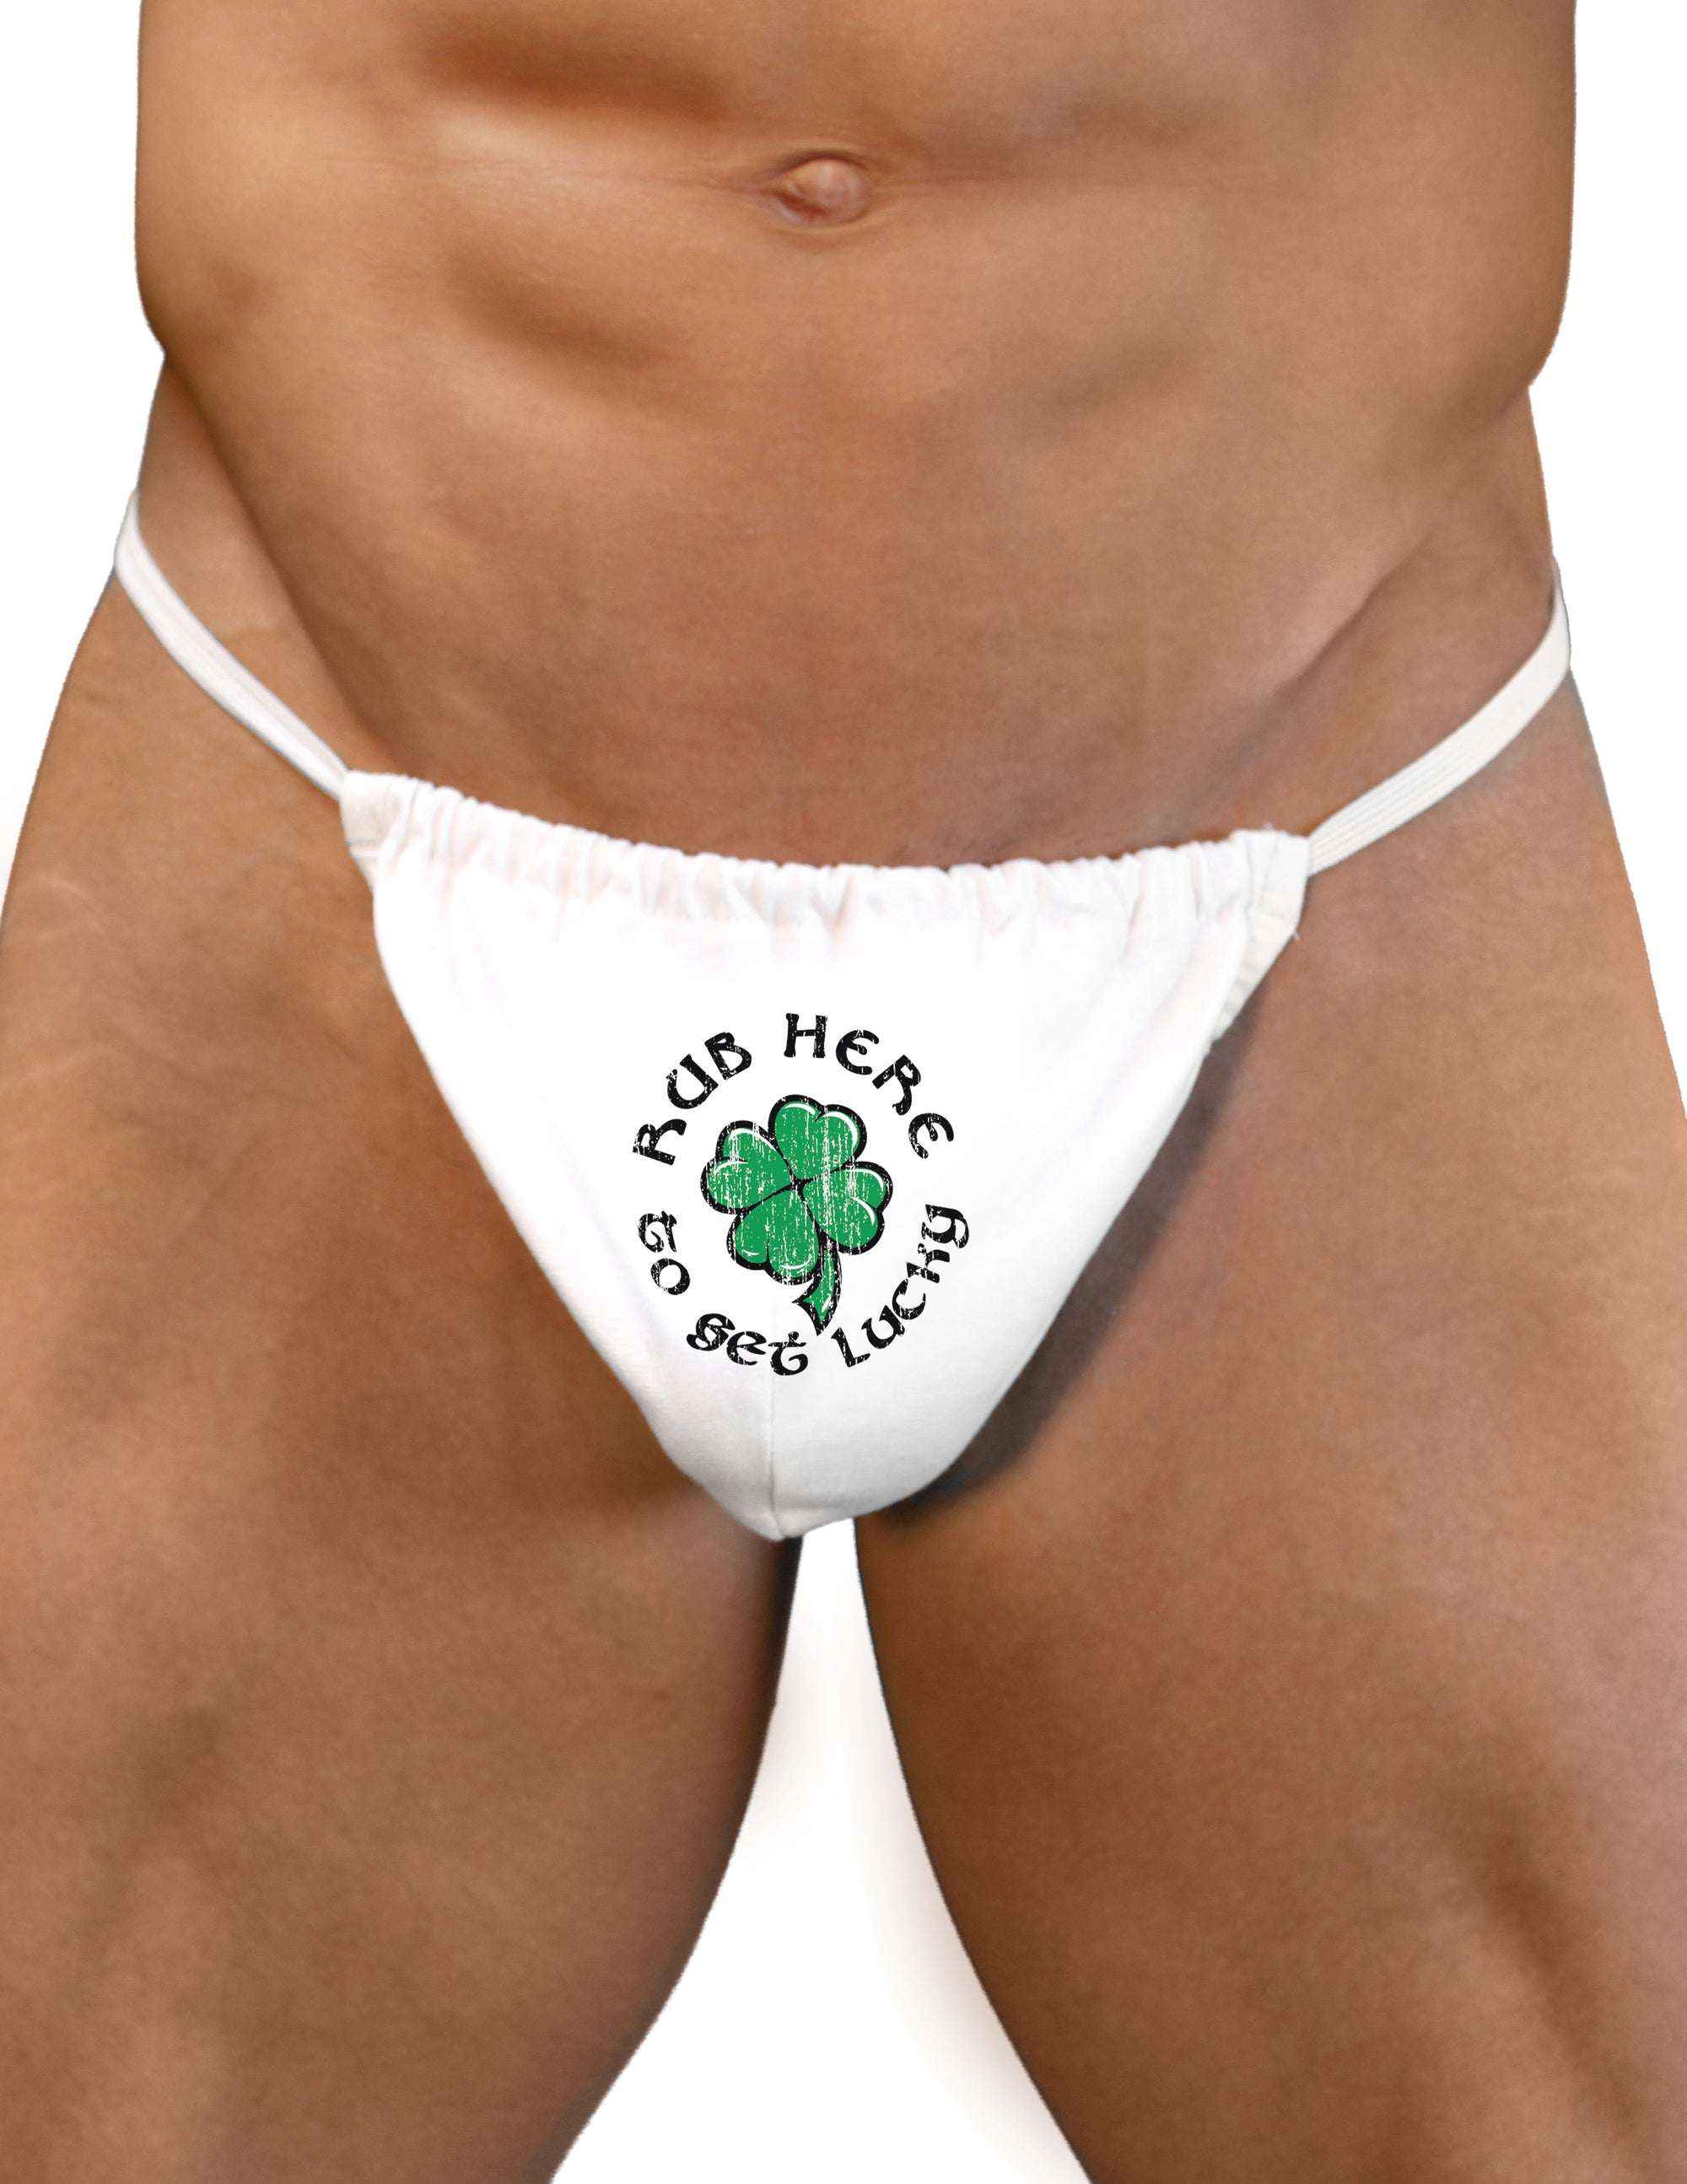 Rub Here to Get Lucky - Mens St Patricks Day G-String Underwear